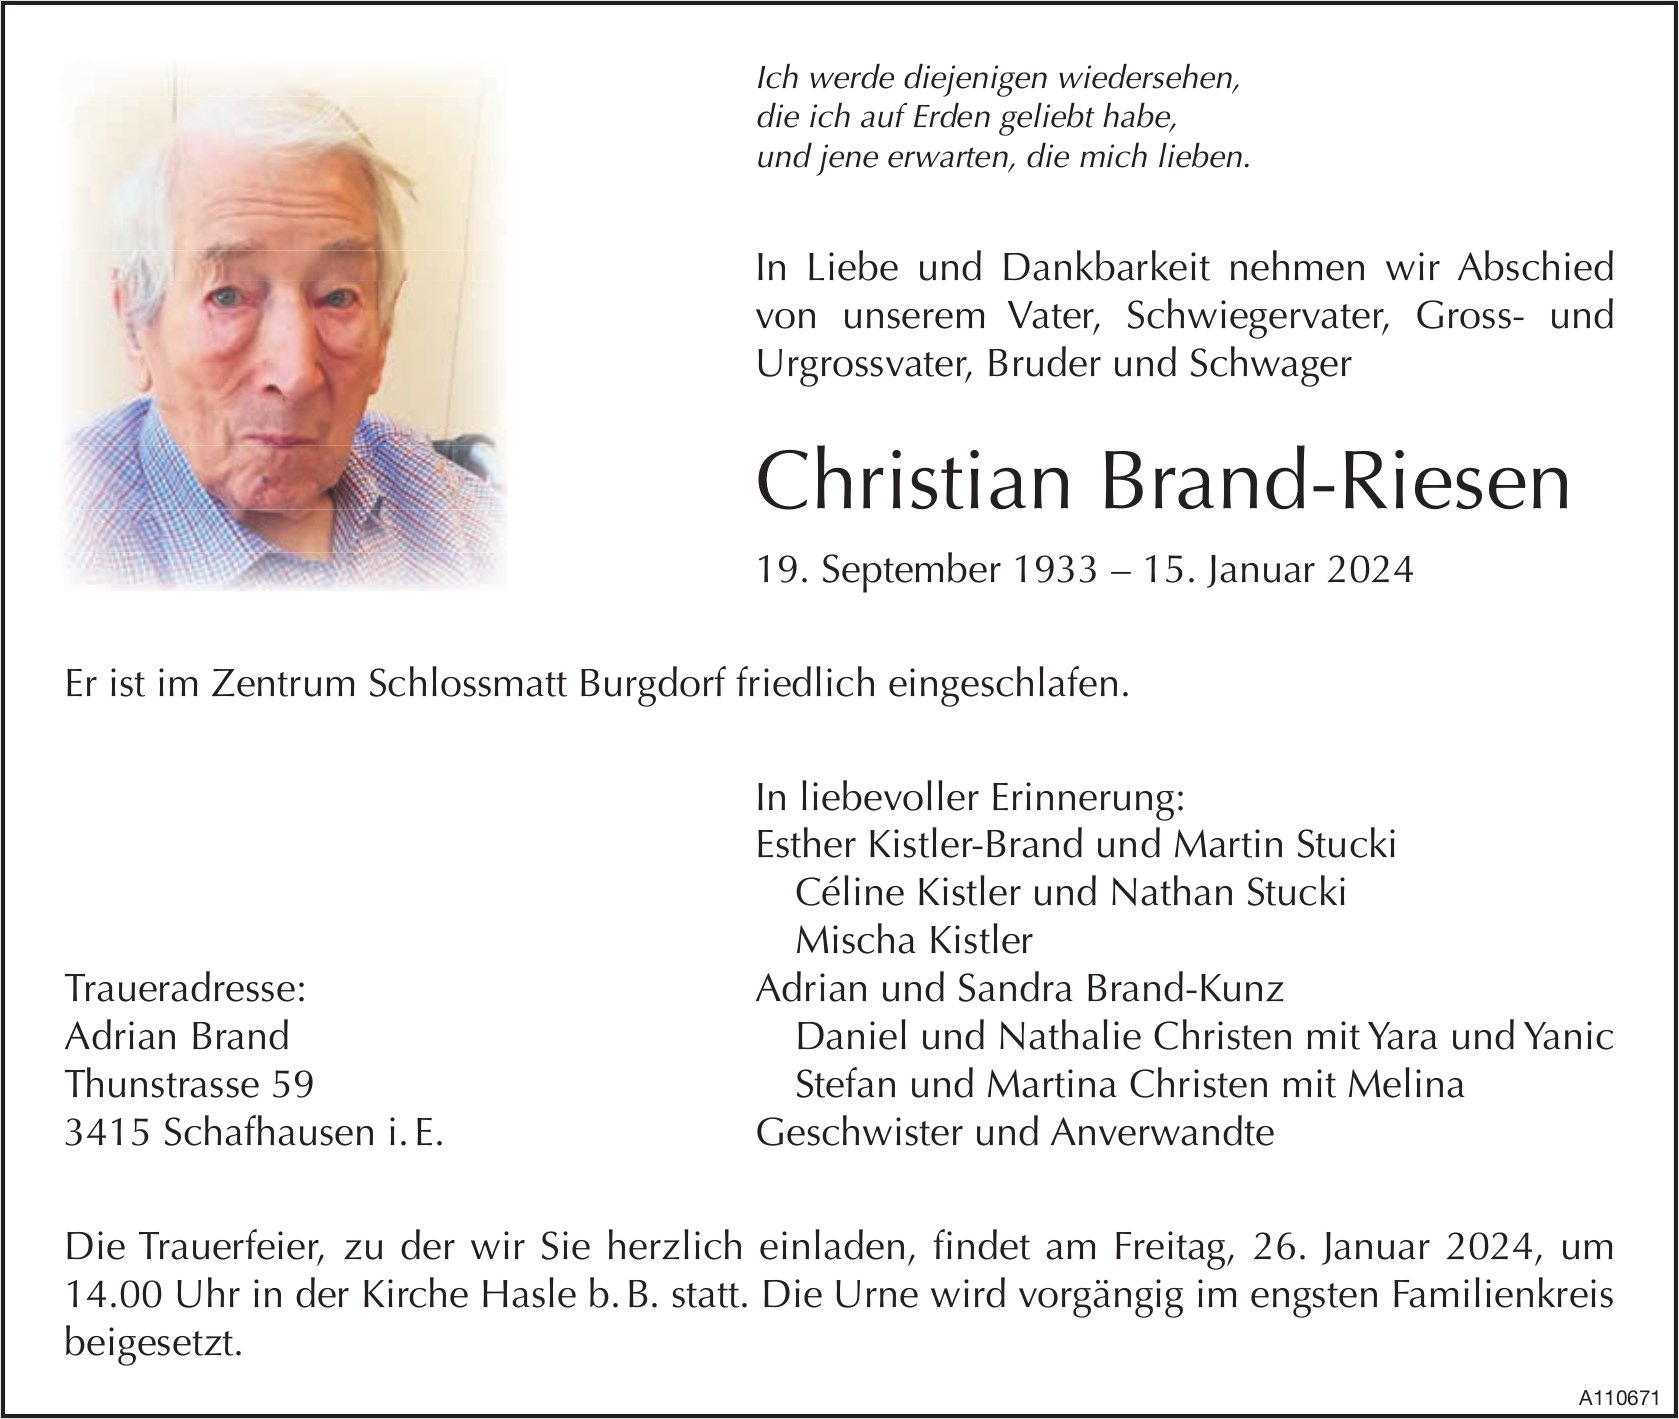 Christian Brand-Riesen, Januar 2024 / TA